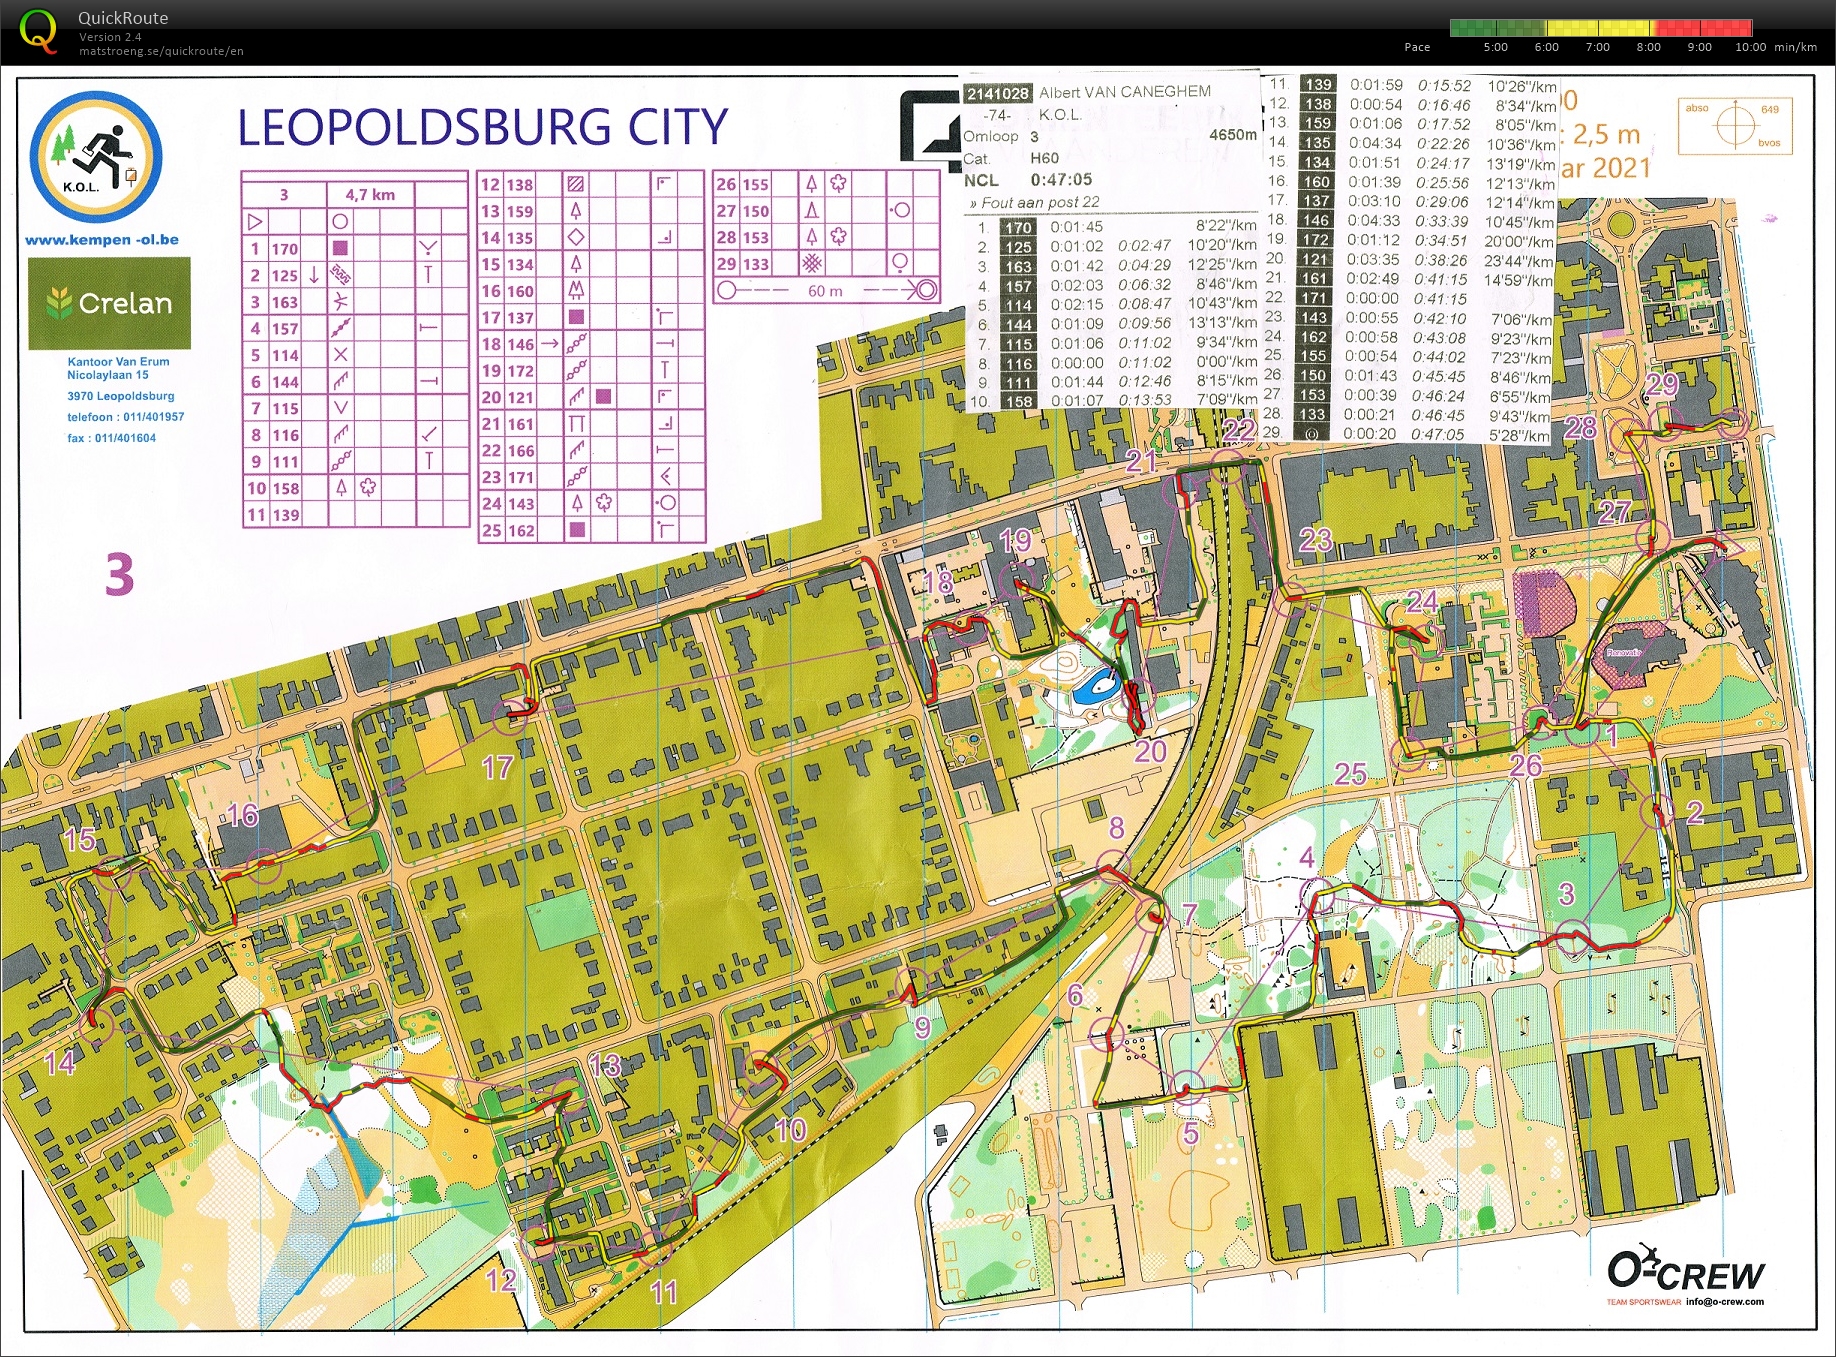 Leopoldsburg City (2021-06-06)